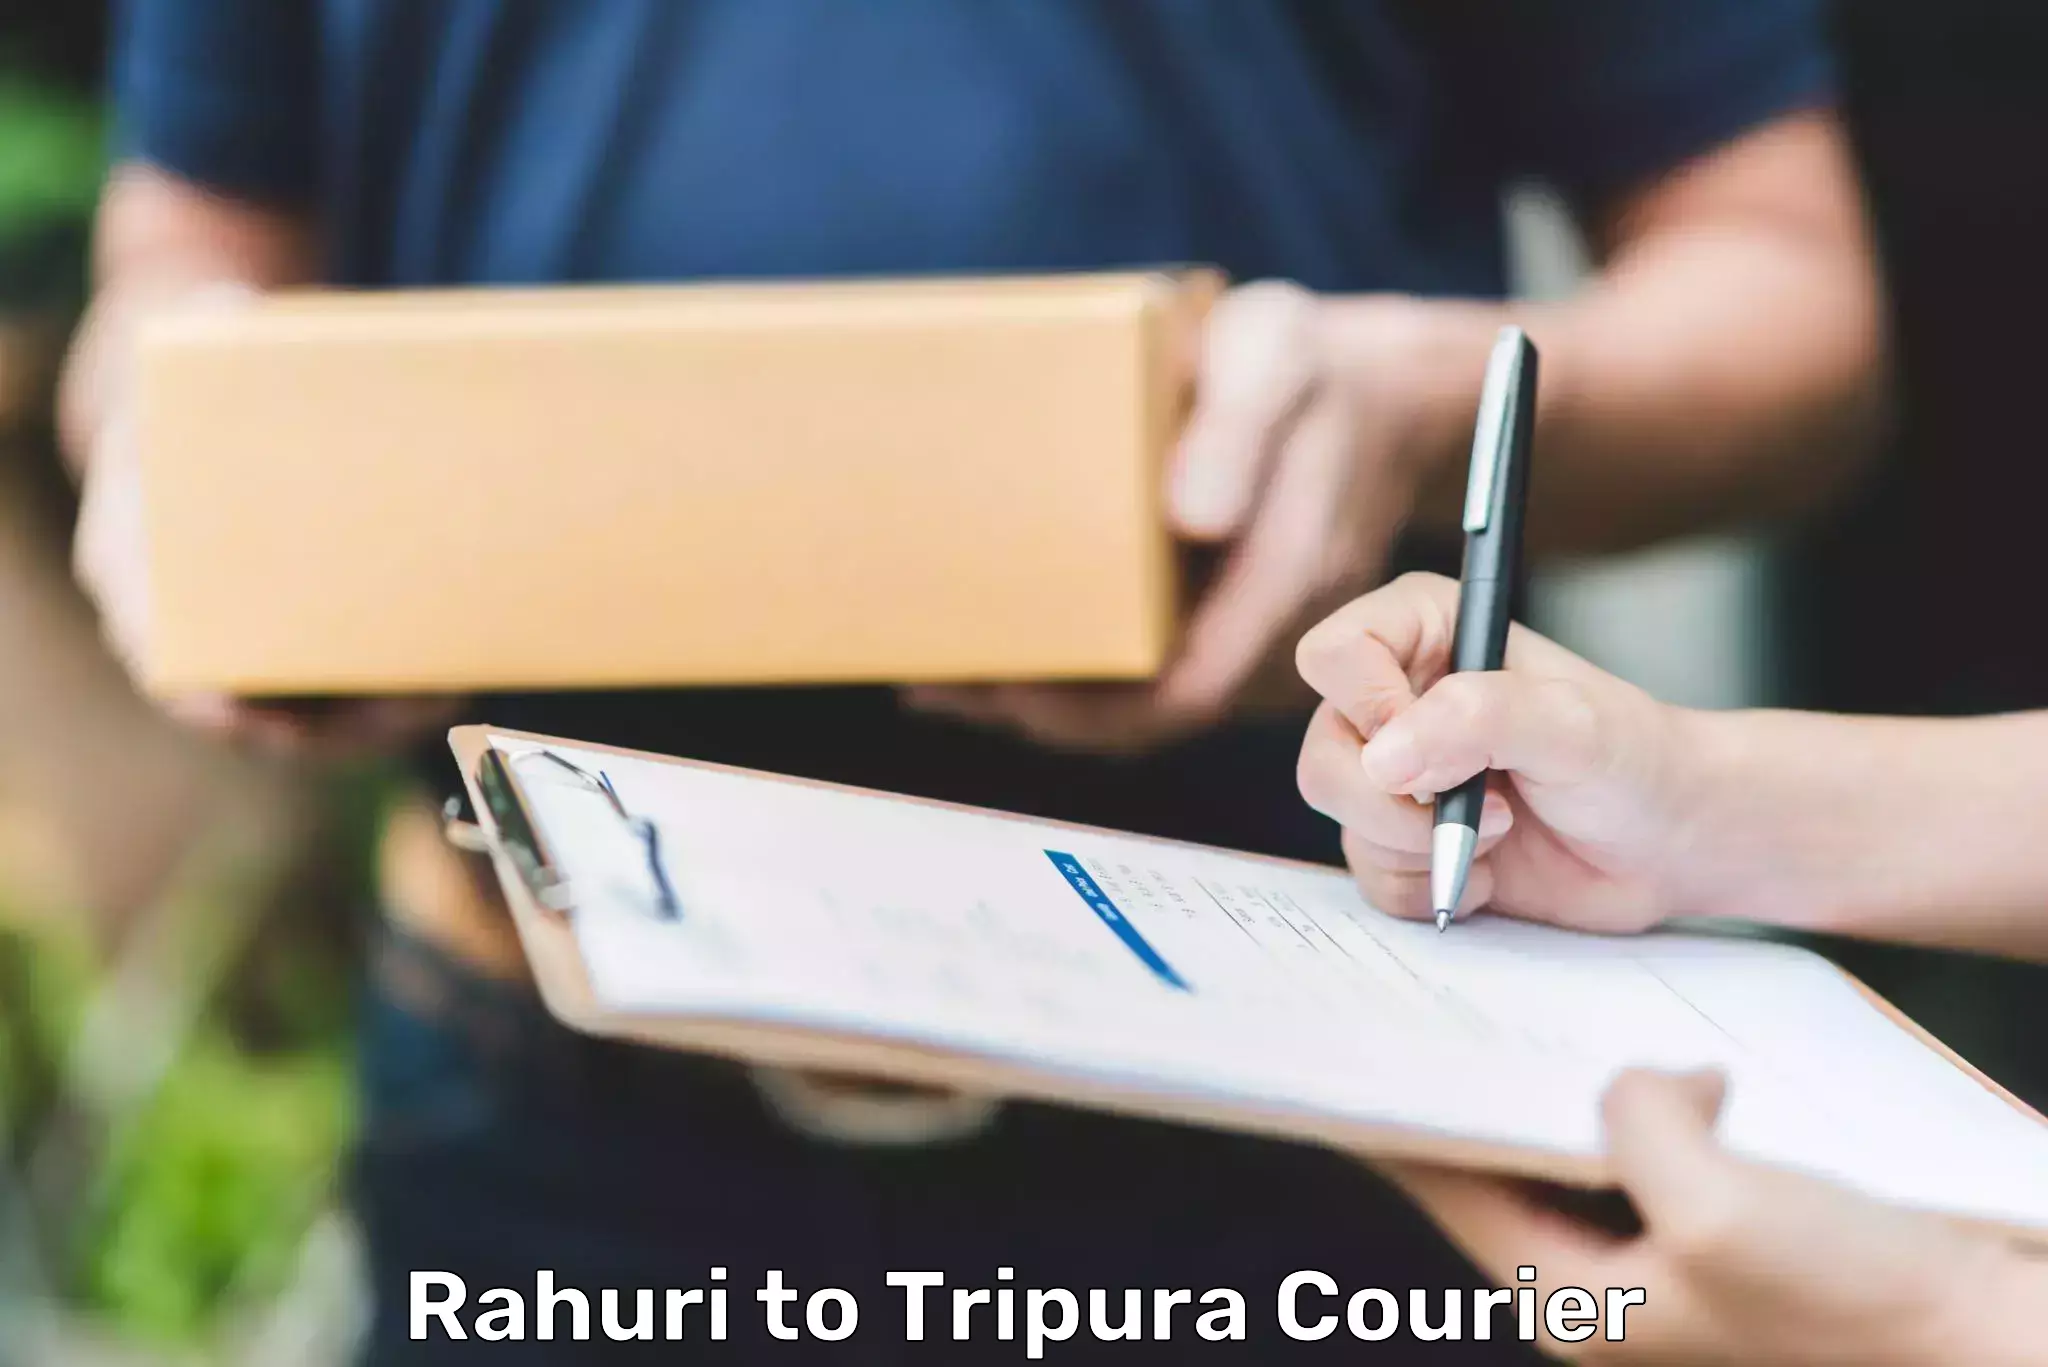 Courier insurance Rahuri to Udaipur Tripura